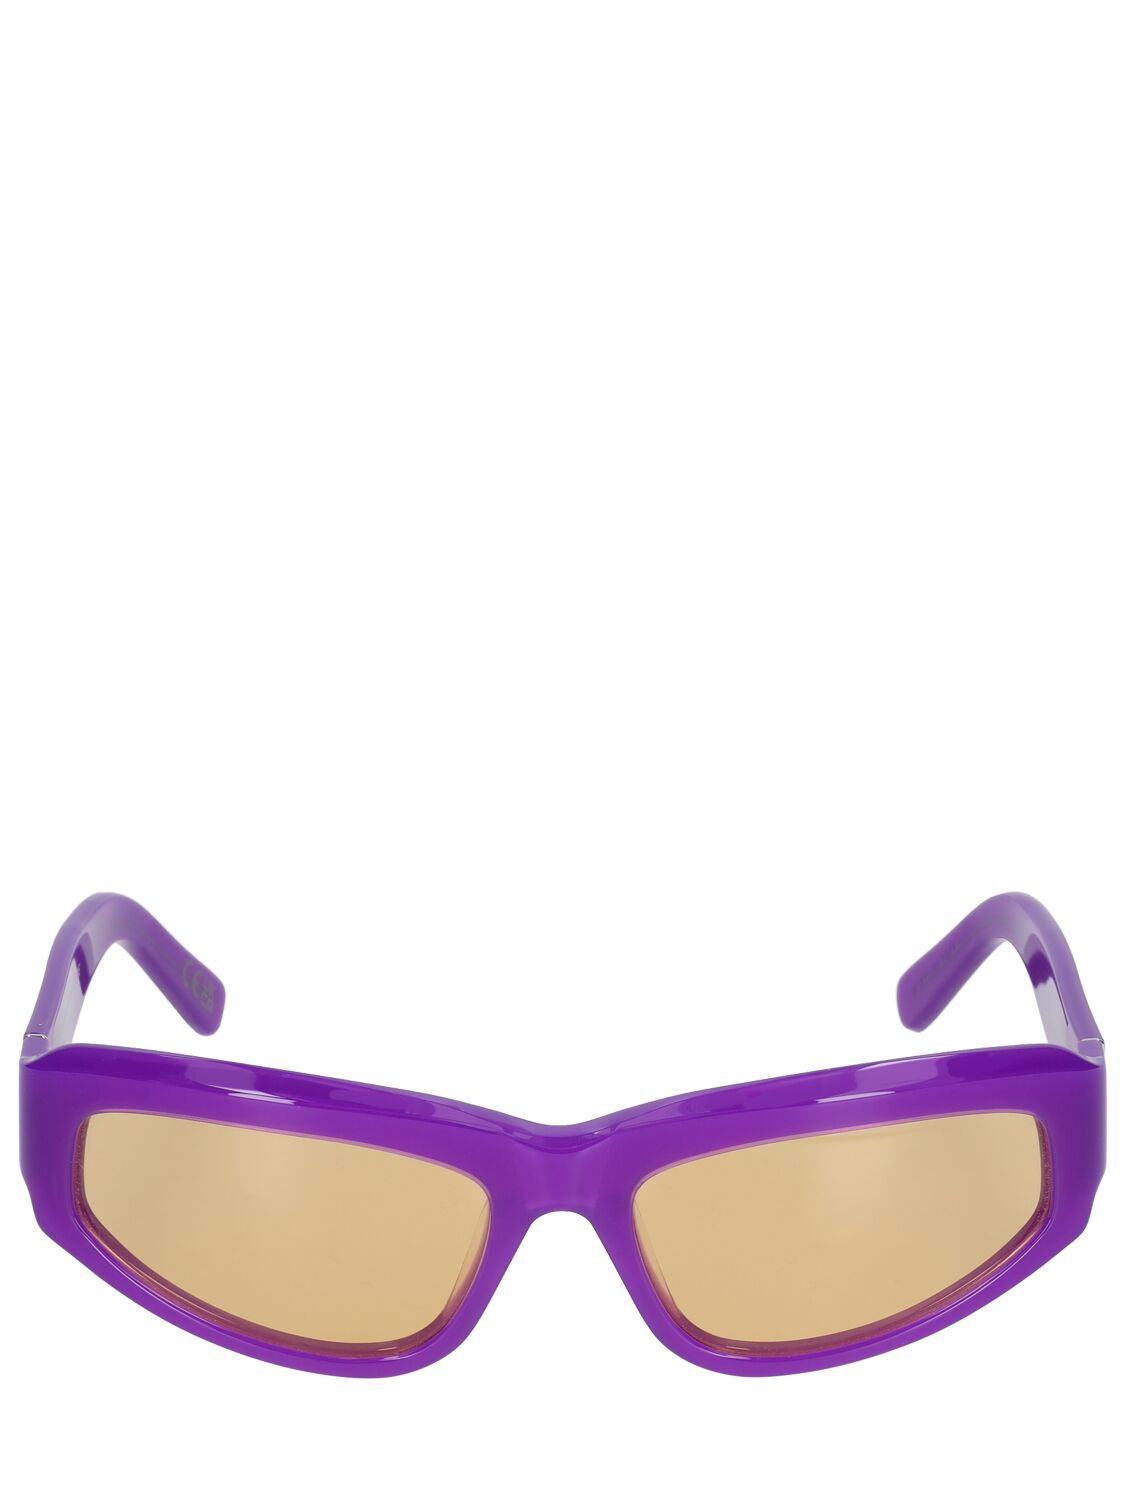 Image of Motore Sunglasses